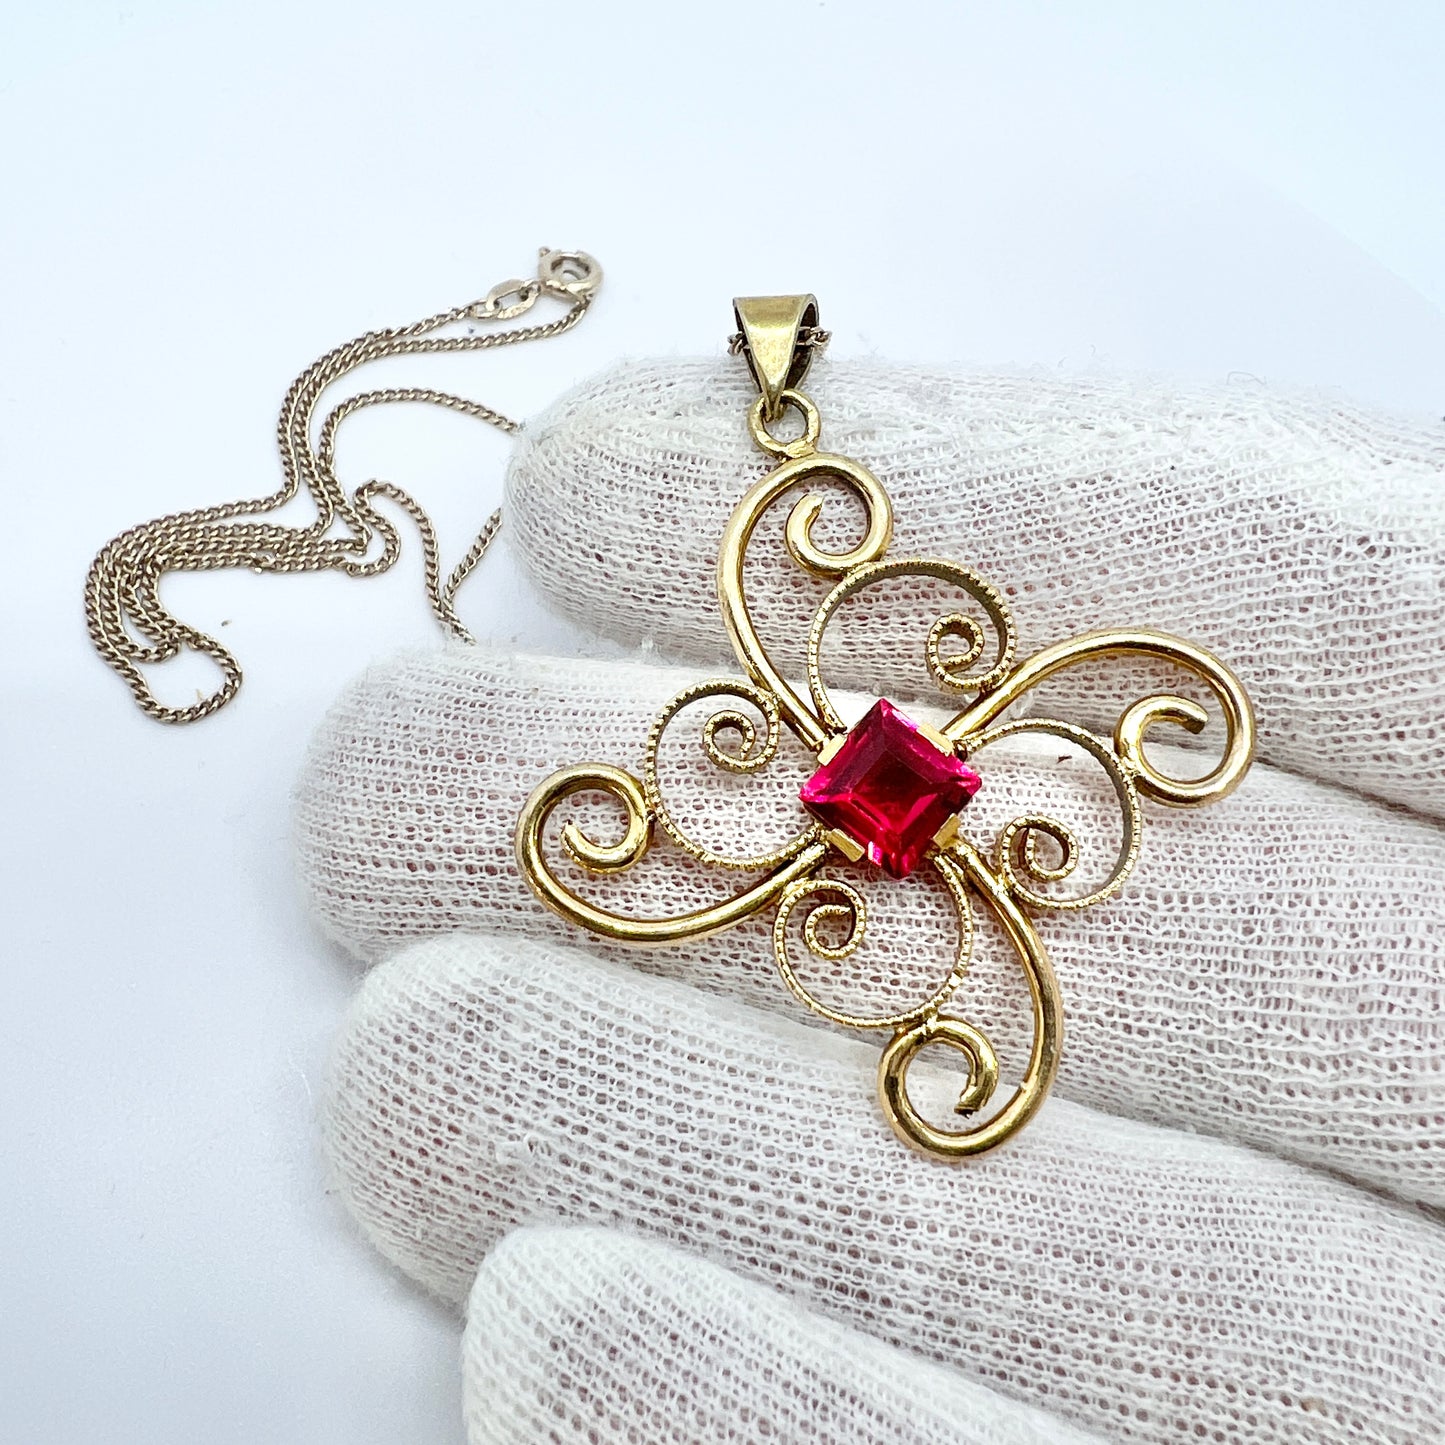 Sixten Allvin & Co, Sweden 1947 Vintage Solid Silver Red Paste Stone Pendant Necklace